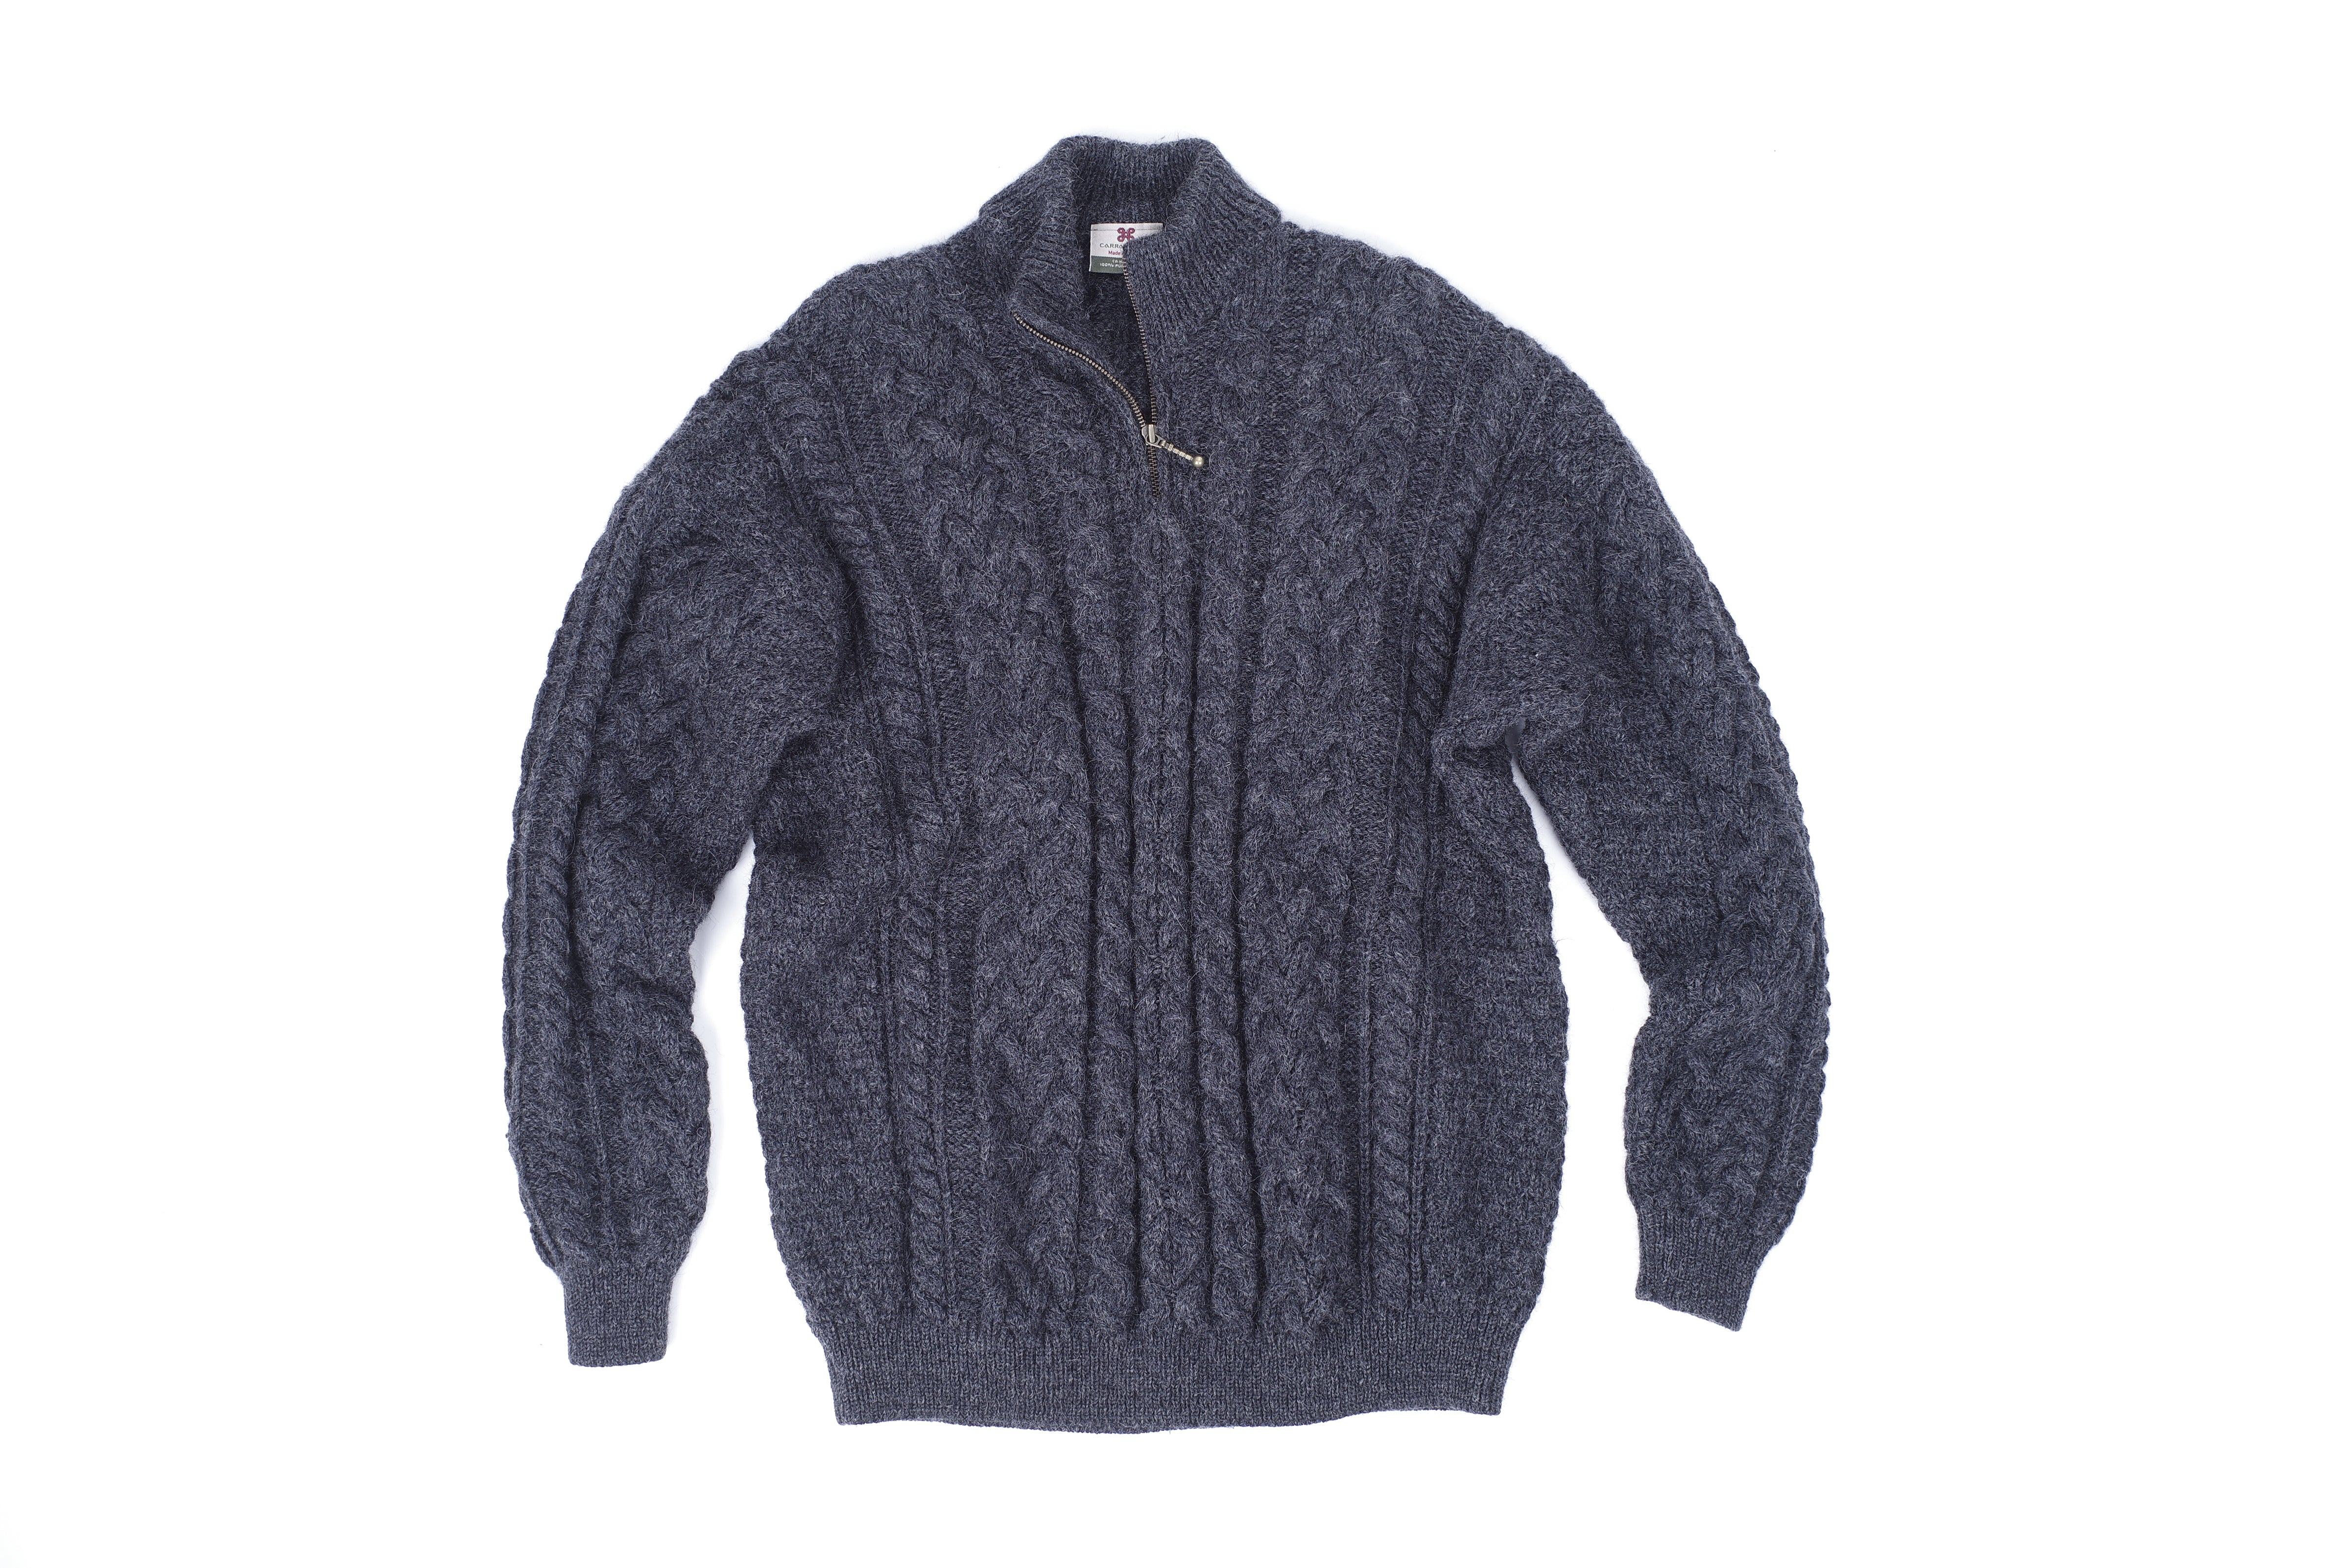 Carraig Donn Irish Wool Fisherman’s Sweater, Men's XL